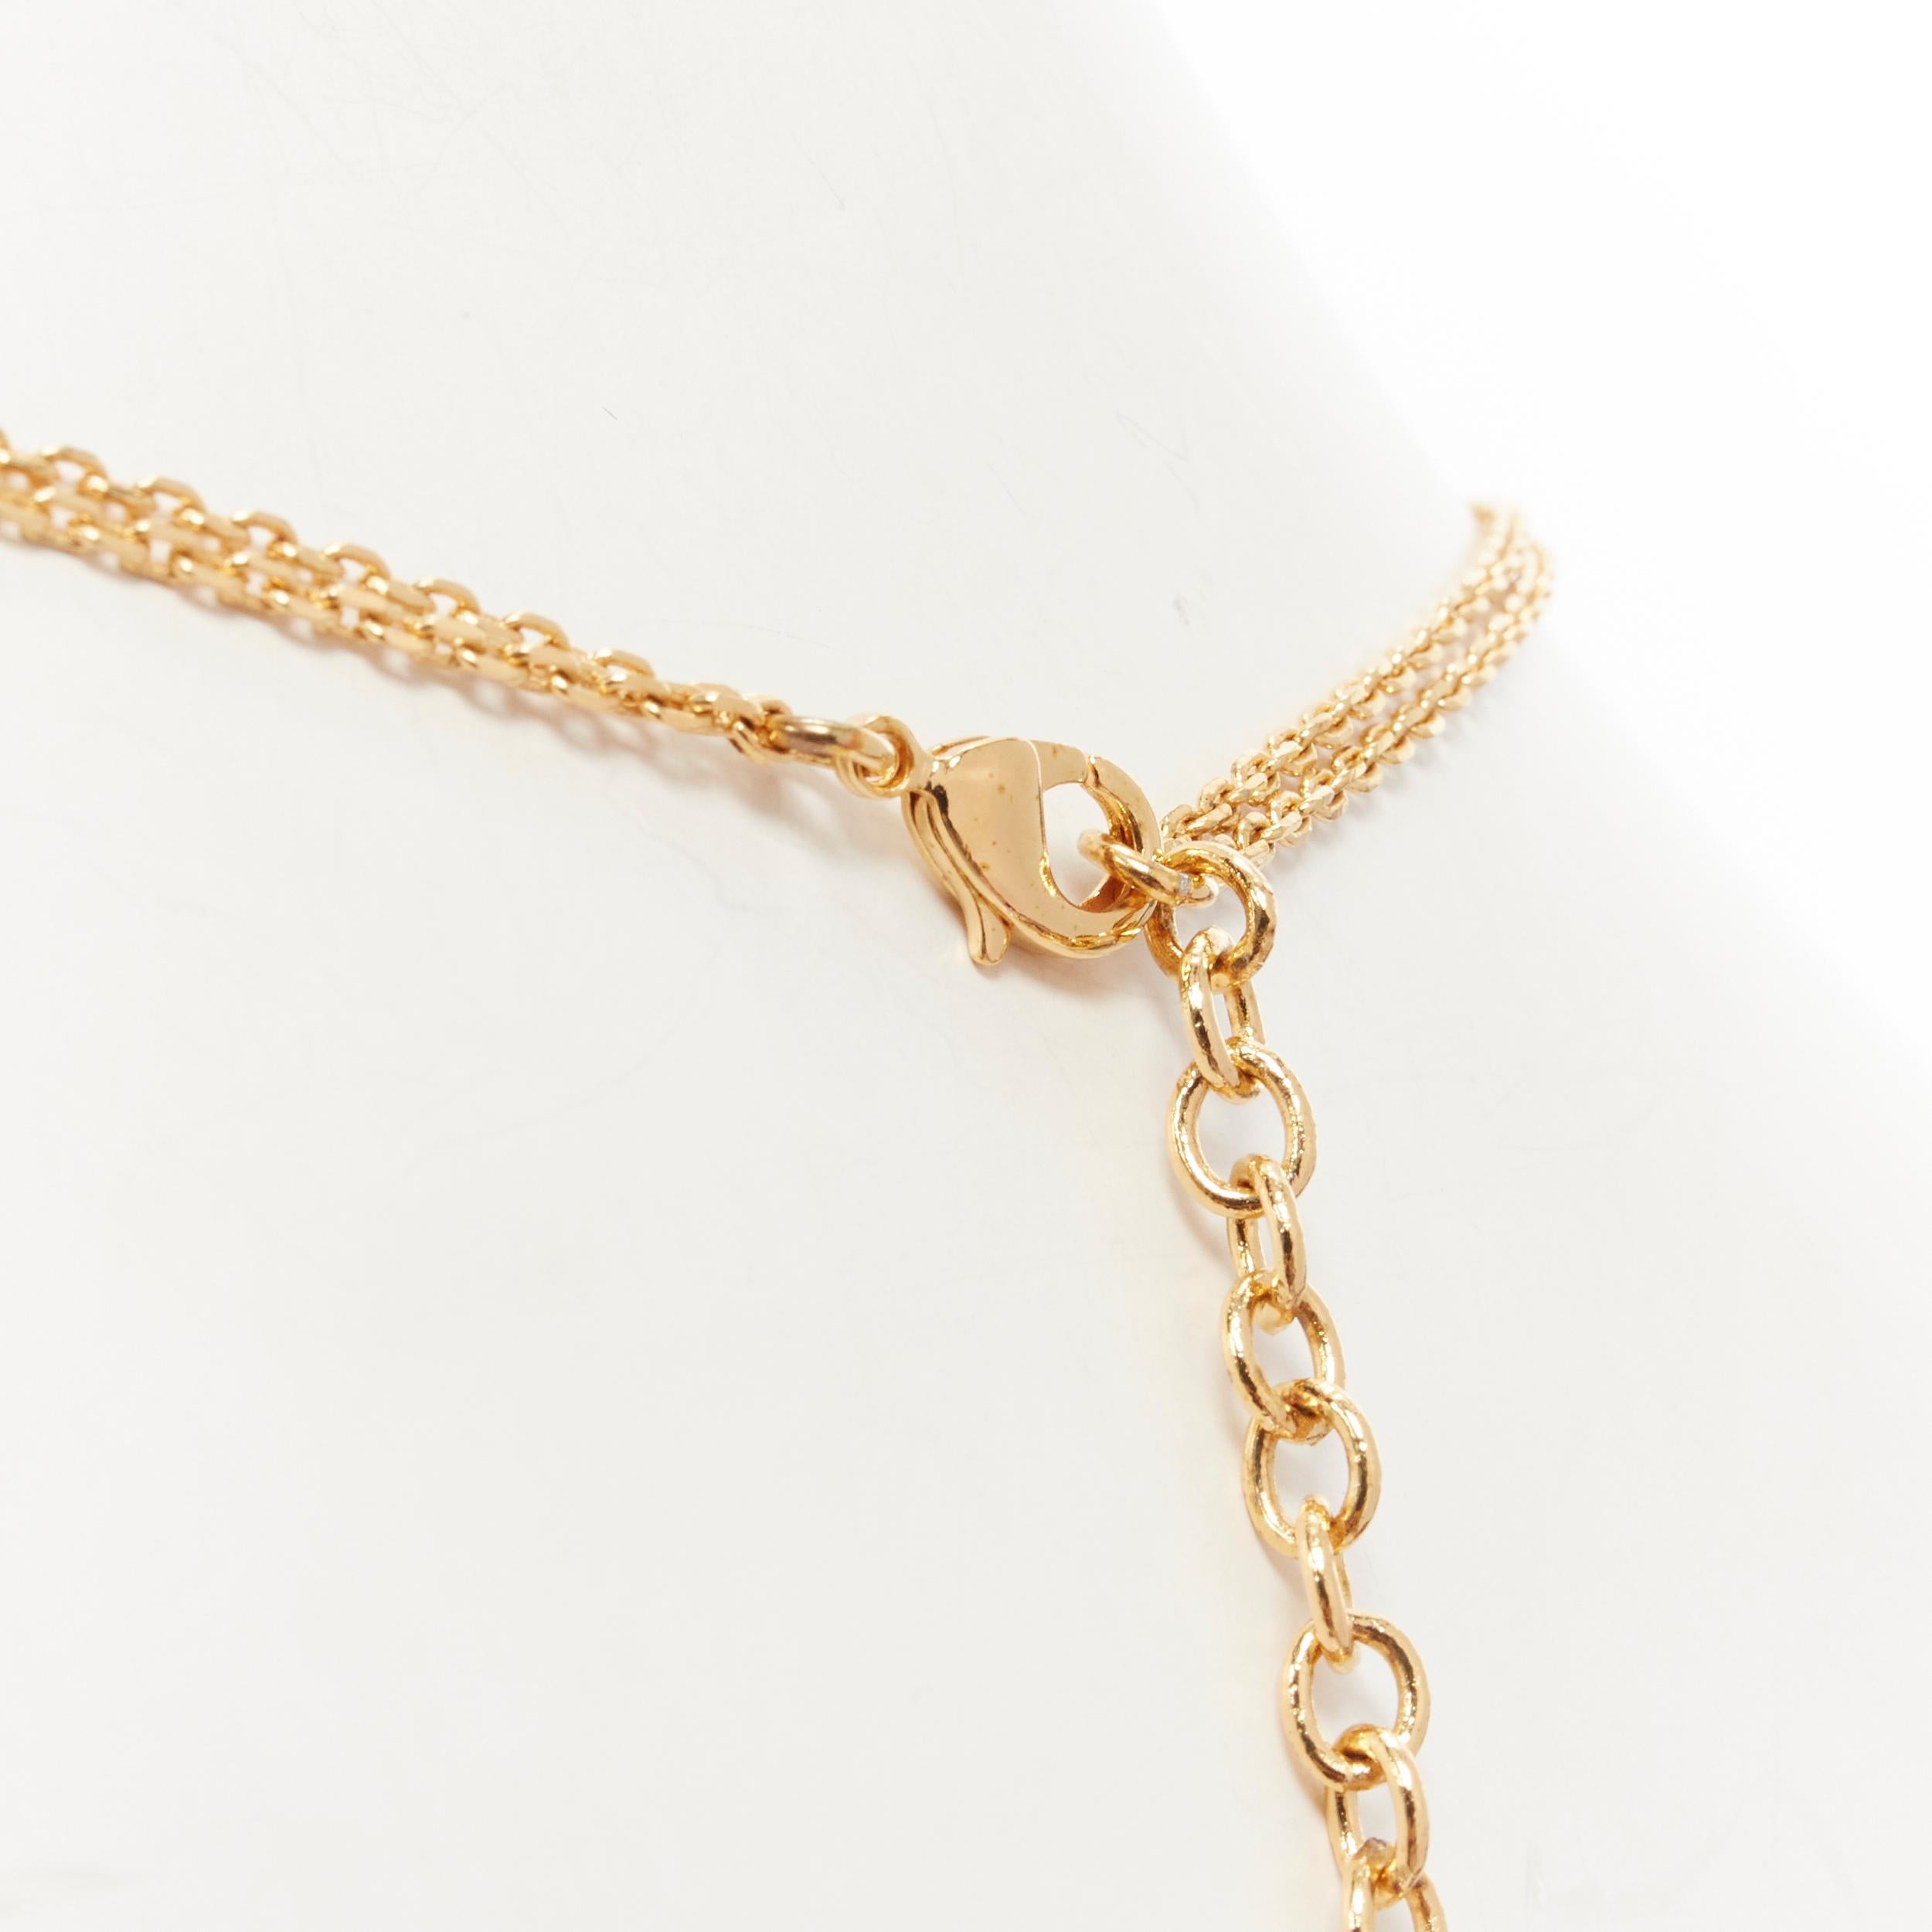 Men's new VERSACE Medusa Safety Pin pendant gold tone nickel short necklace choker